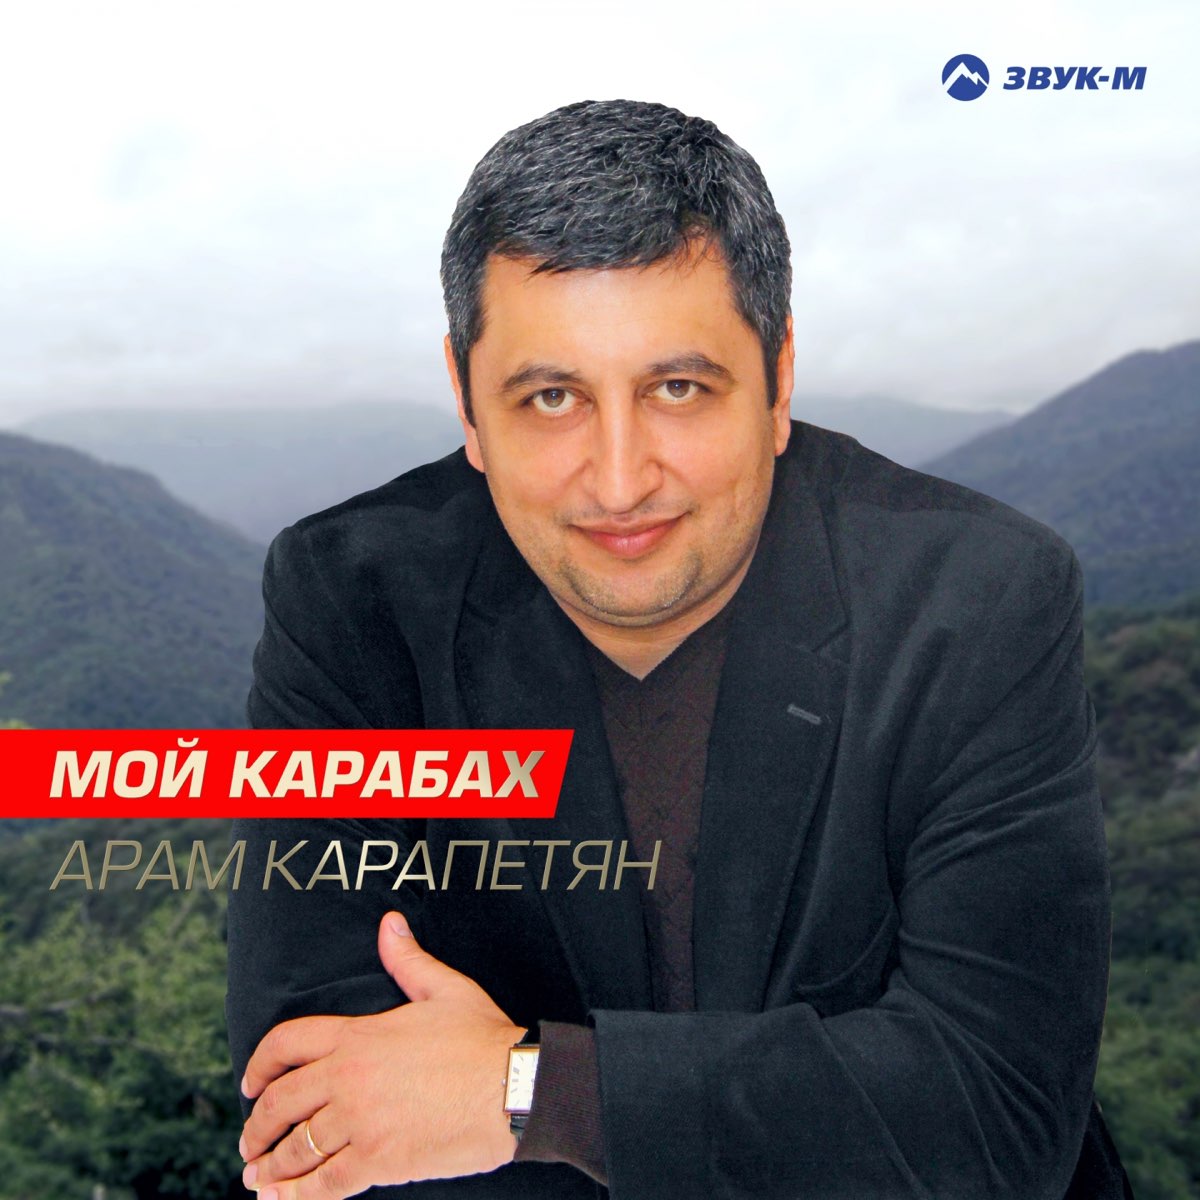 Карабах песни слушать. Карабах мой. Песни Арама Карапетяна. Арцах музыка слушать.